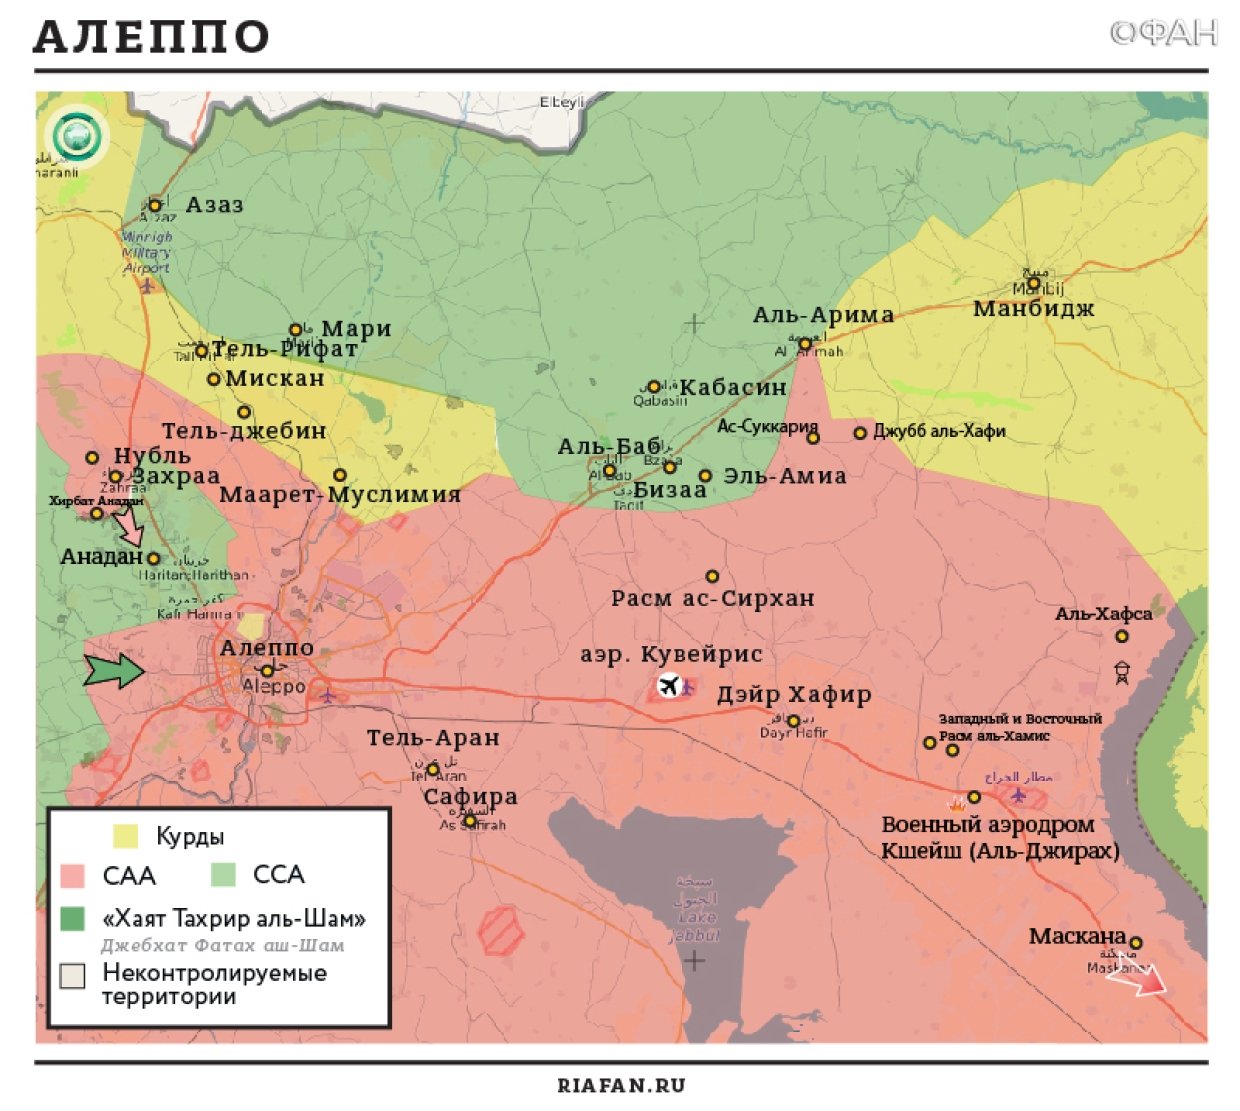 Сирия новости 28 августа 19.30: ВКС РФ уничтожили 26 единиц техники ИГ в Дейр эз-Зоре, в Дамаске возобновились бои между САА и радикалами 